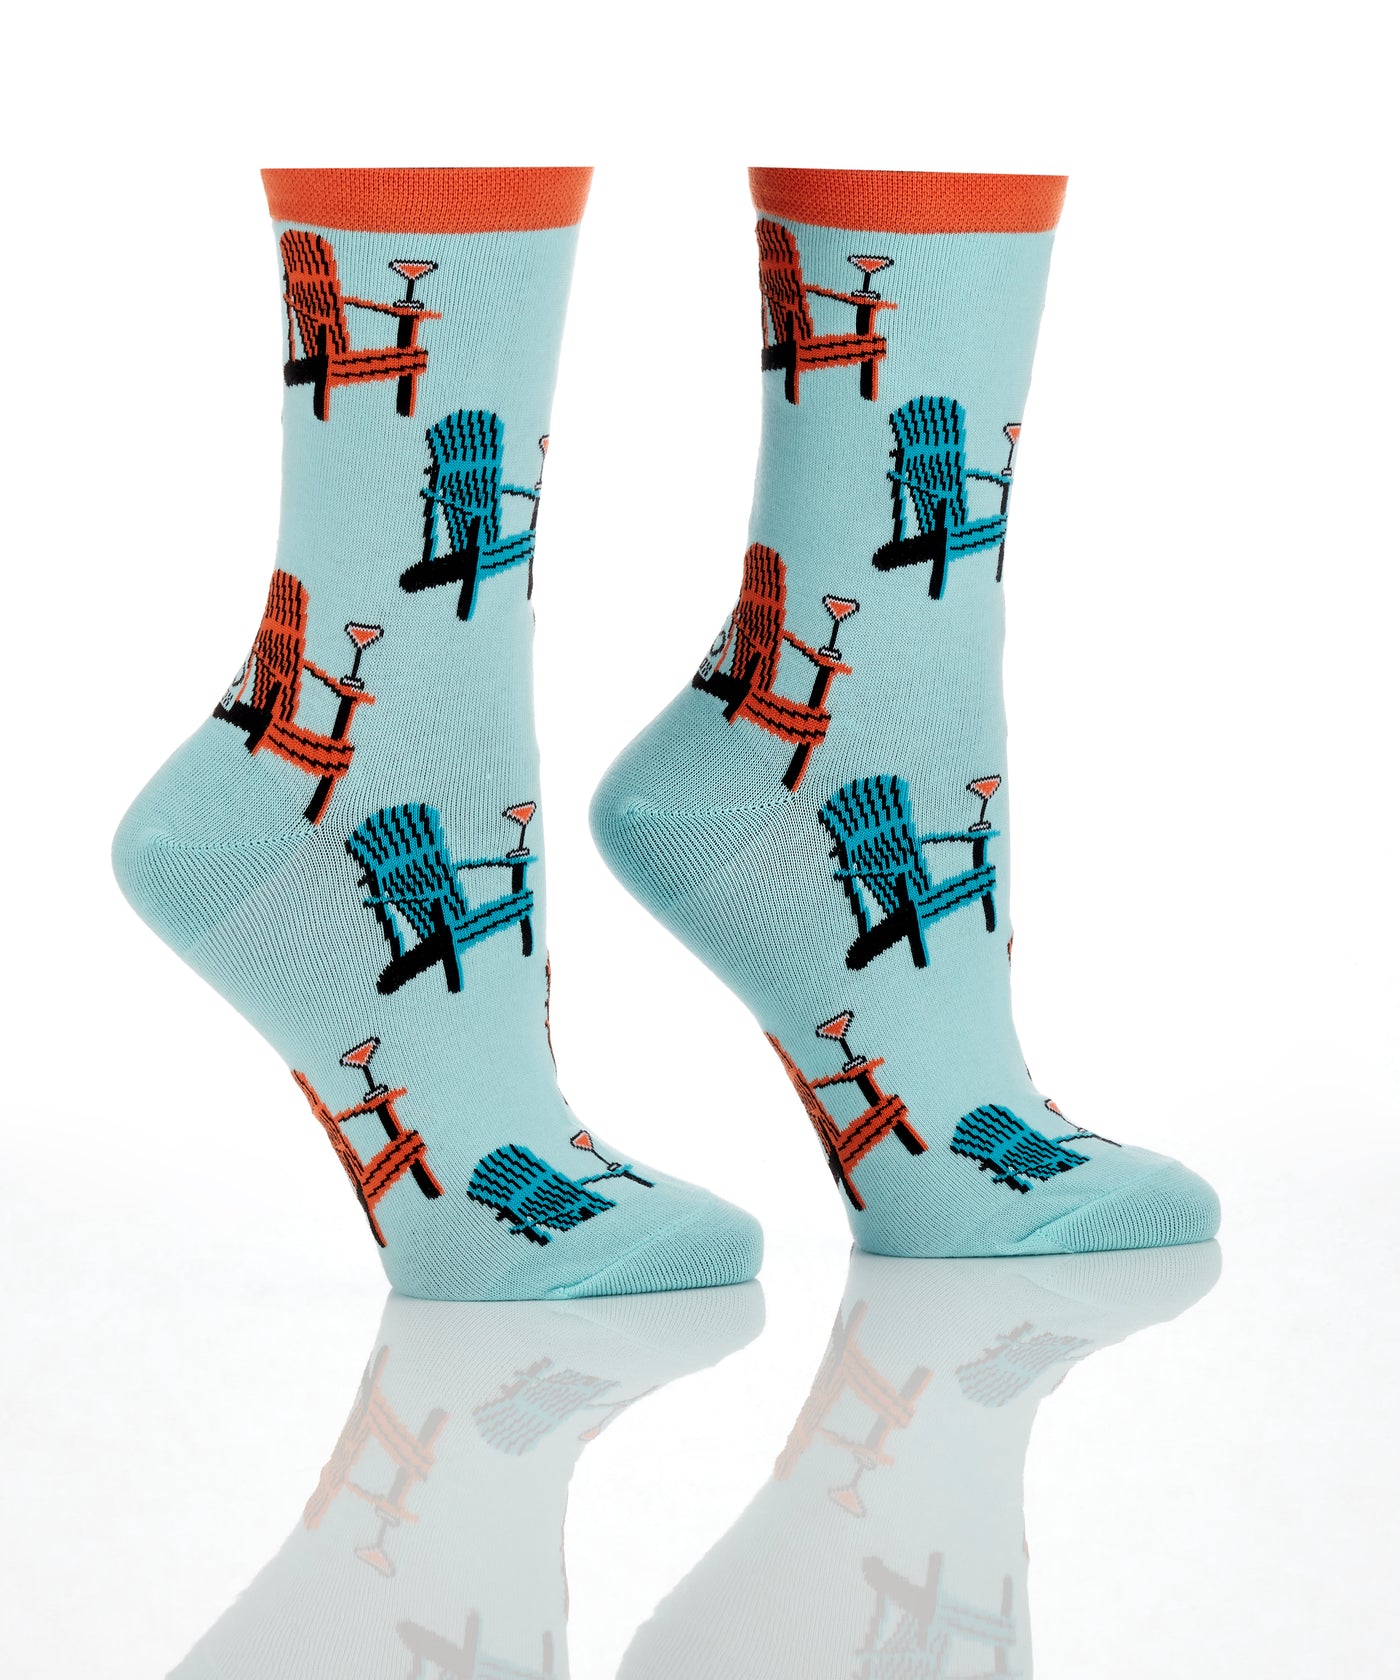 "Muskoka Chair" Cotton Dress Crew Socks by YO Sox -Medium